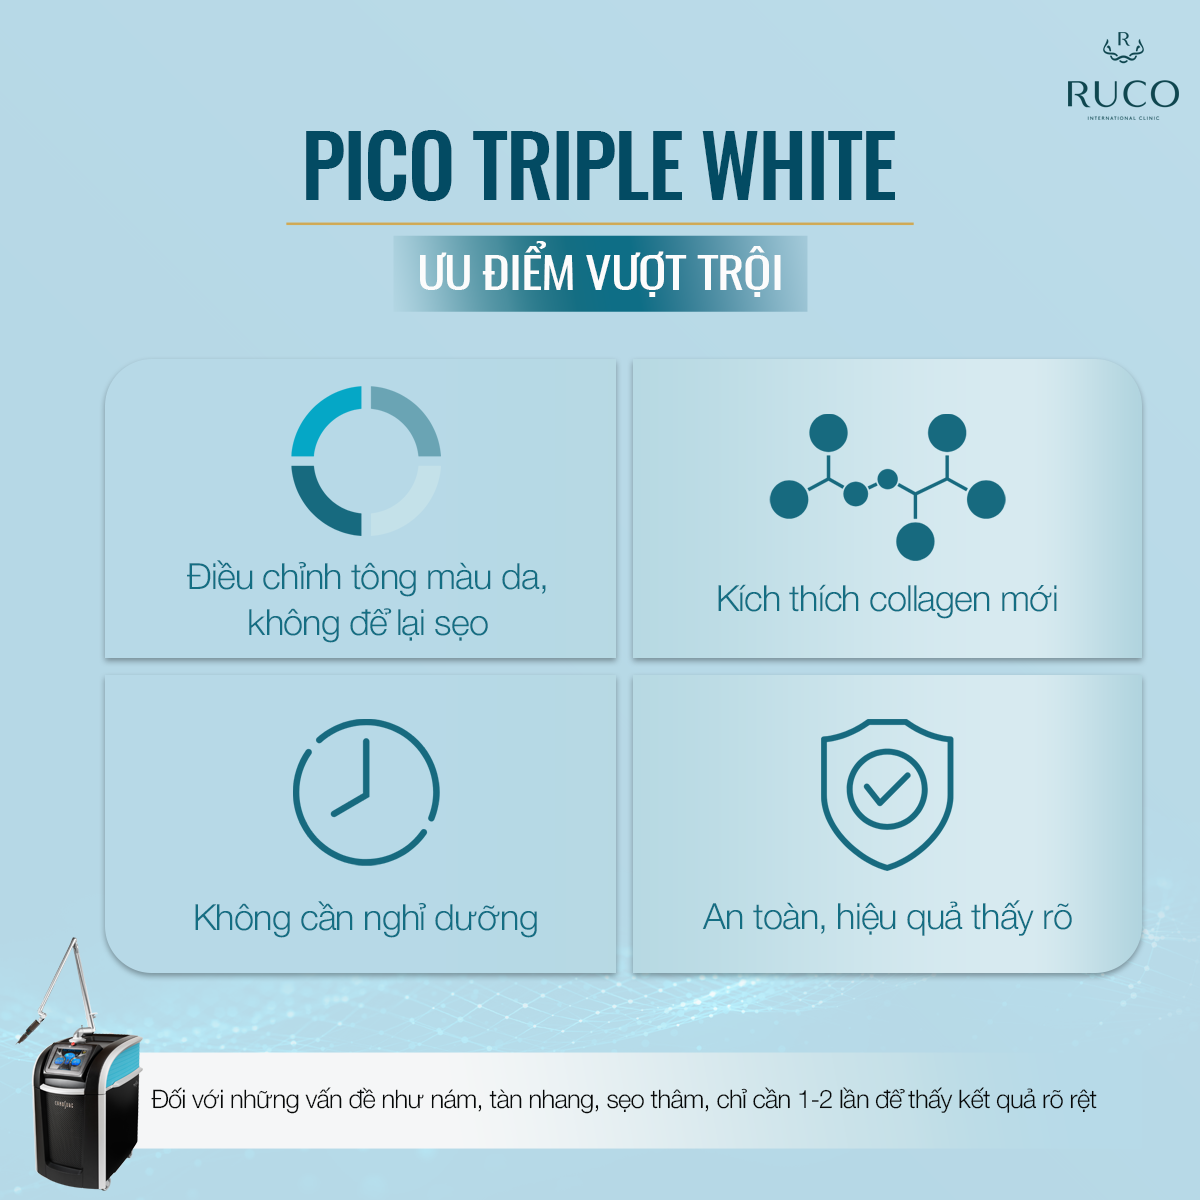 pico triple white ưu nhược điểm